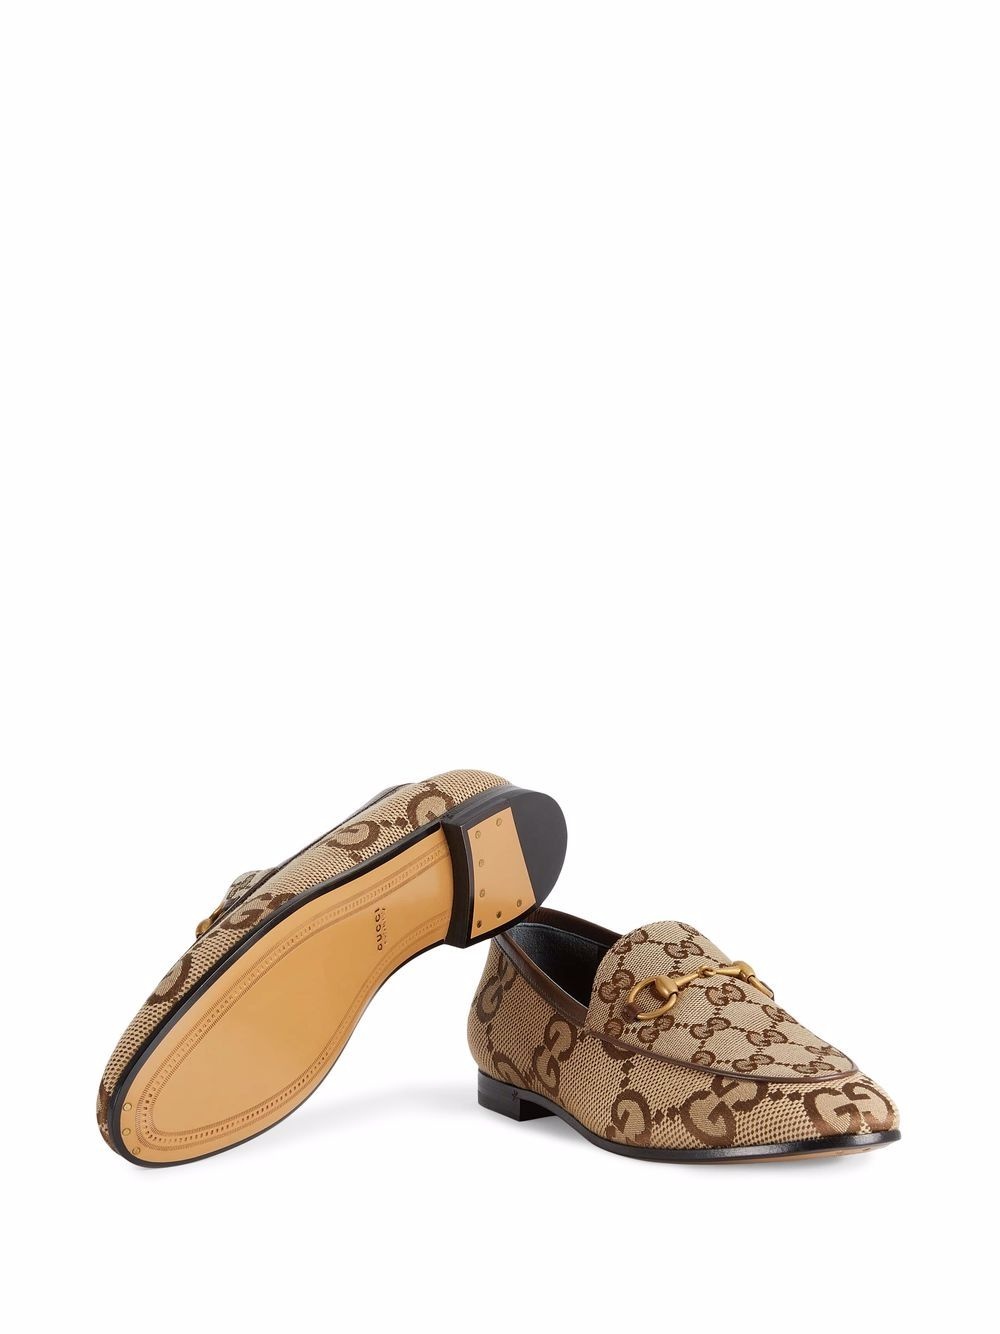 GG Gucci Jordaan loafers - 5